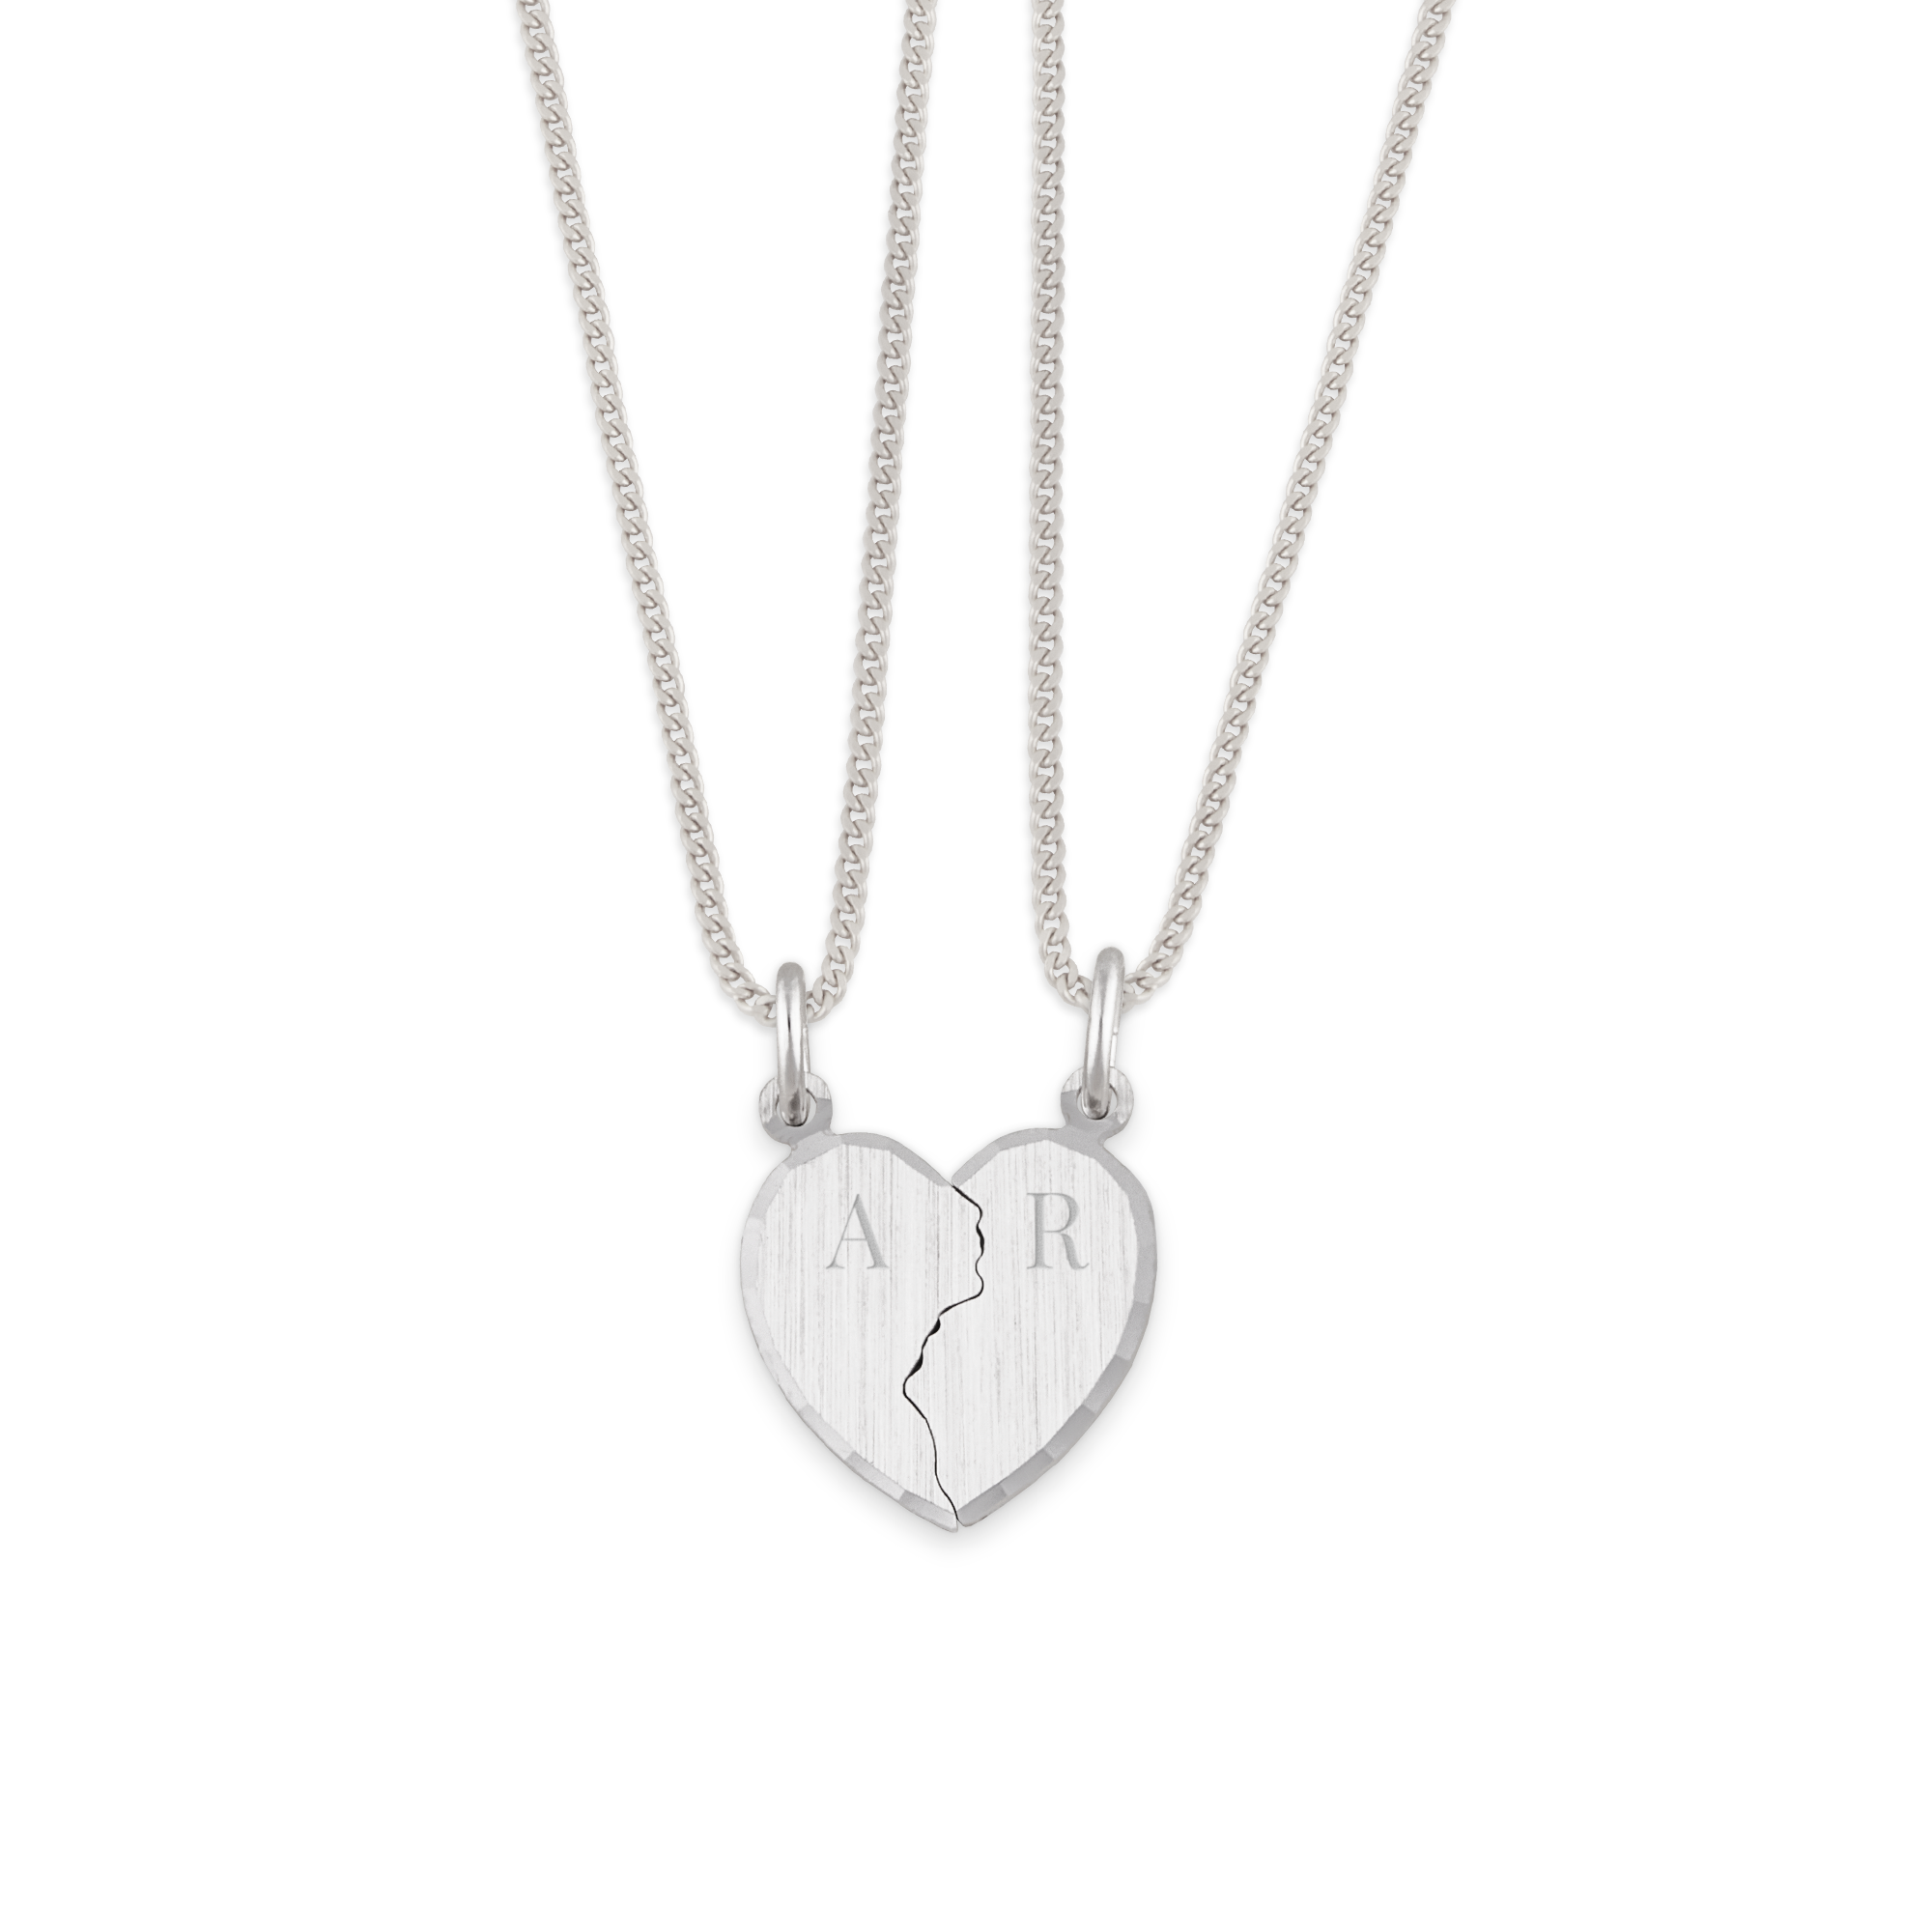 Silver pendant - Broken heart with initials